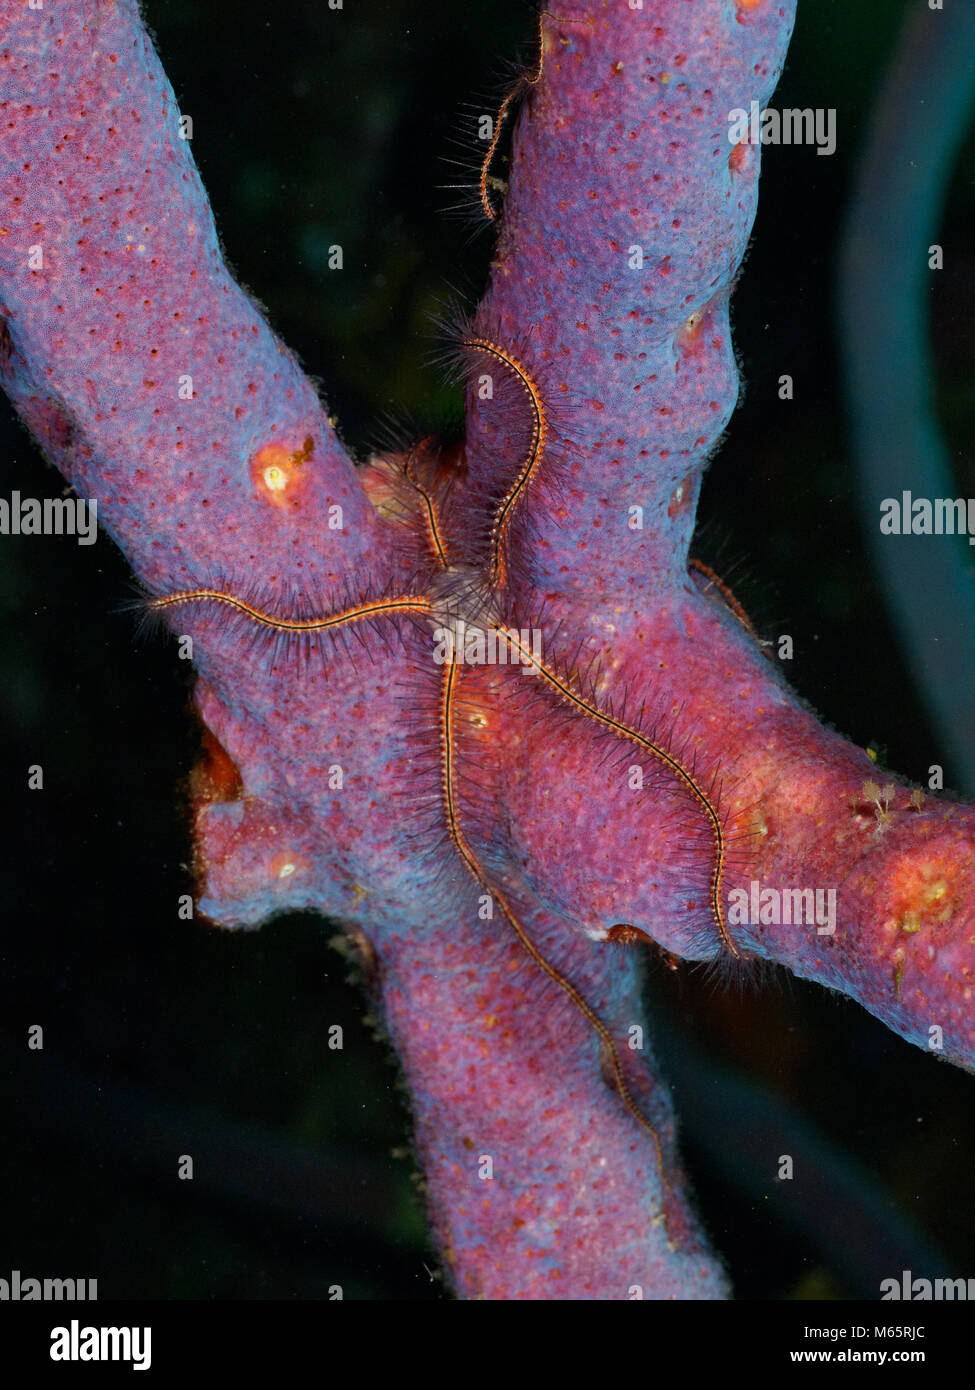 Brittle starfish on purple sponge, closeup. Stock Photo